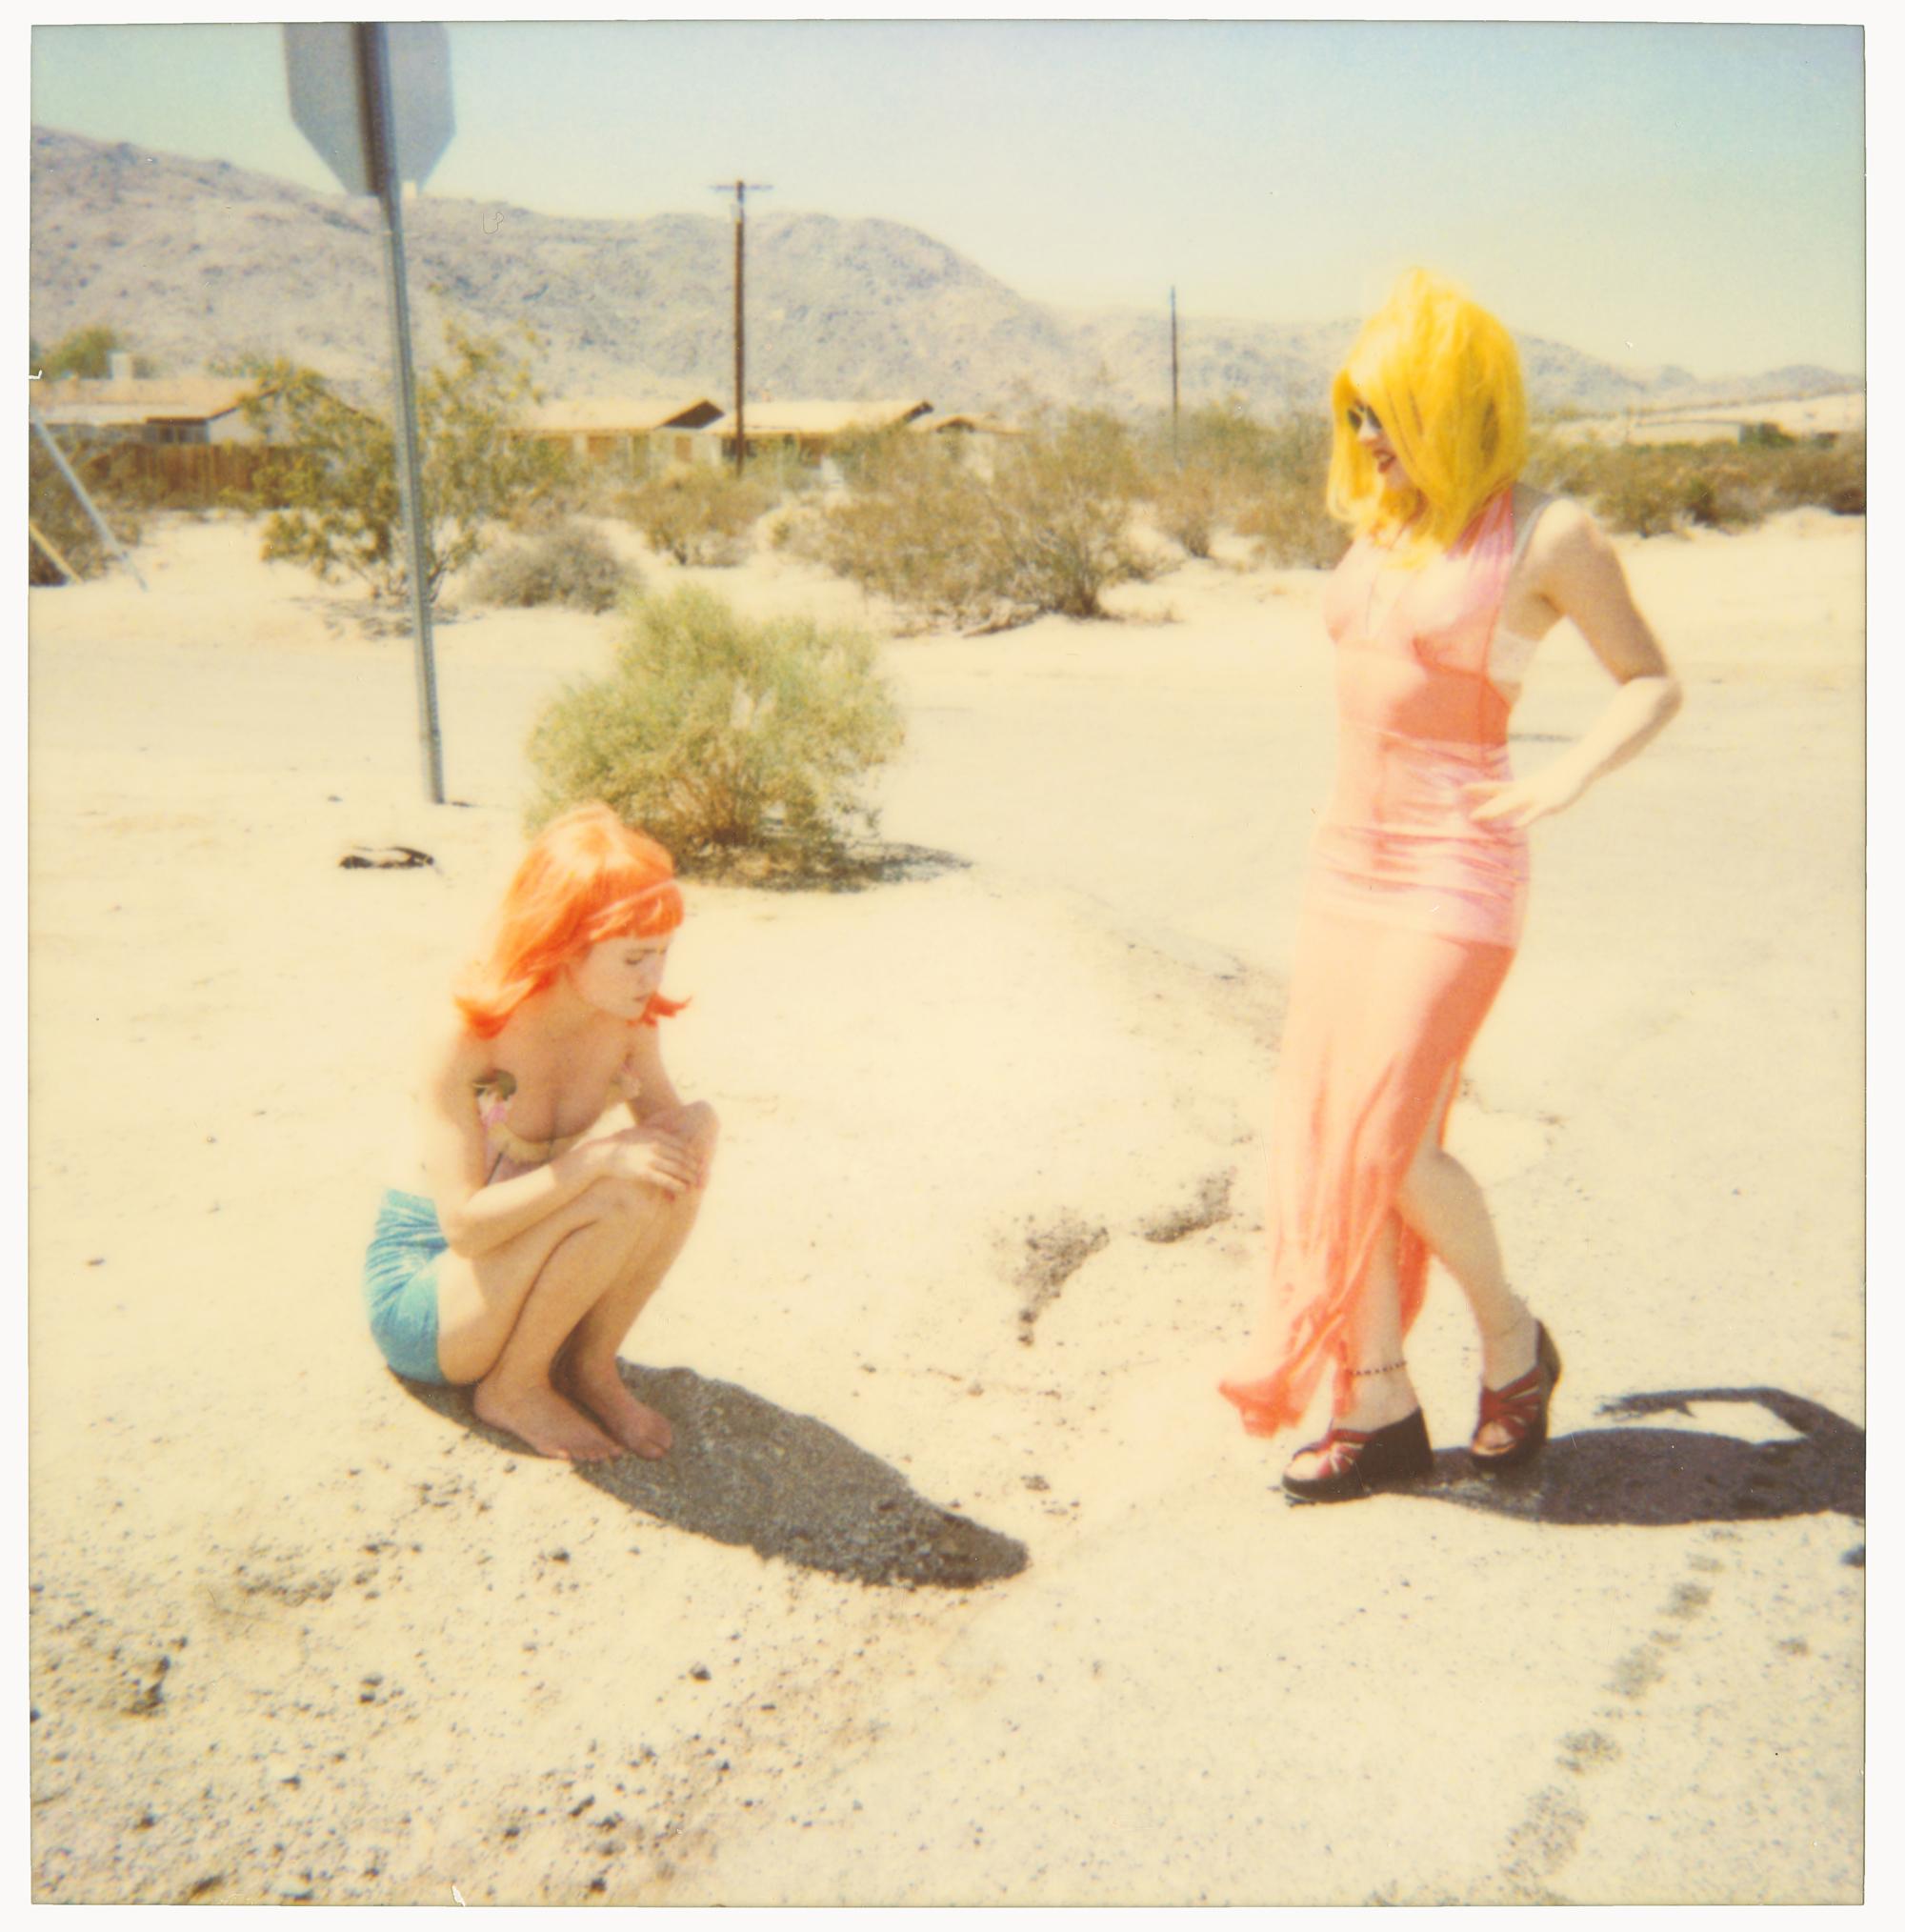 Radha and Max on Dirt Road (29 Palms, CA) - analogue, Polaroid, contemporain - Photograph de Stefanie Schneider